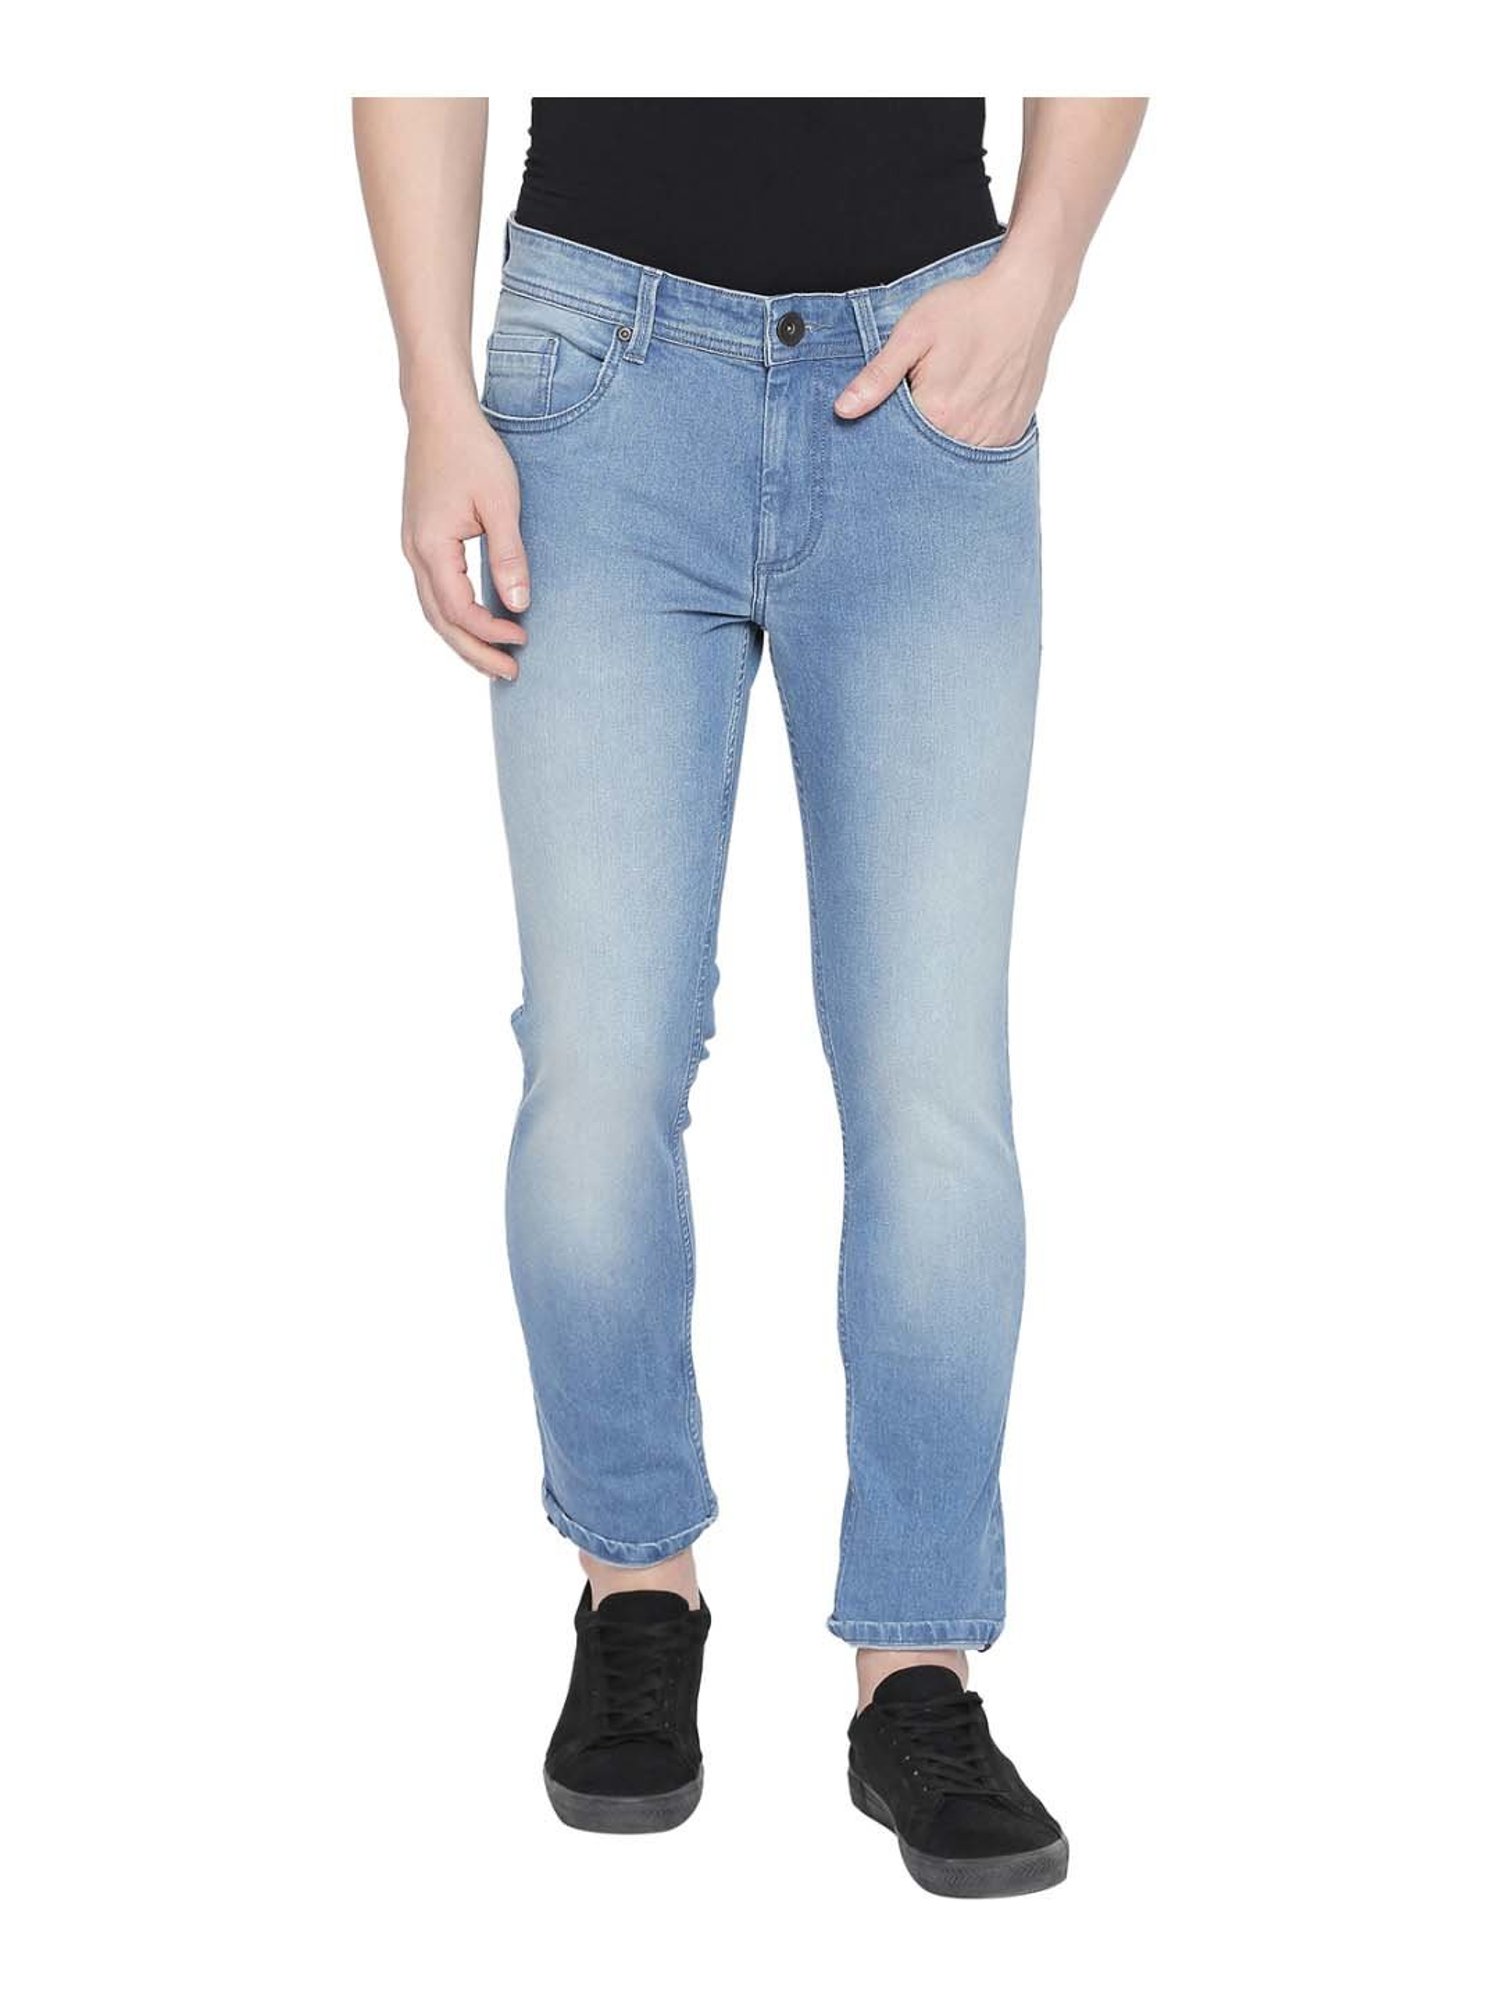 basics jeans price